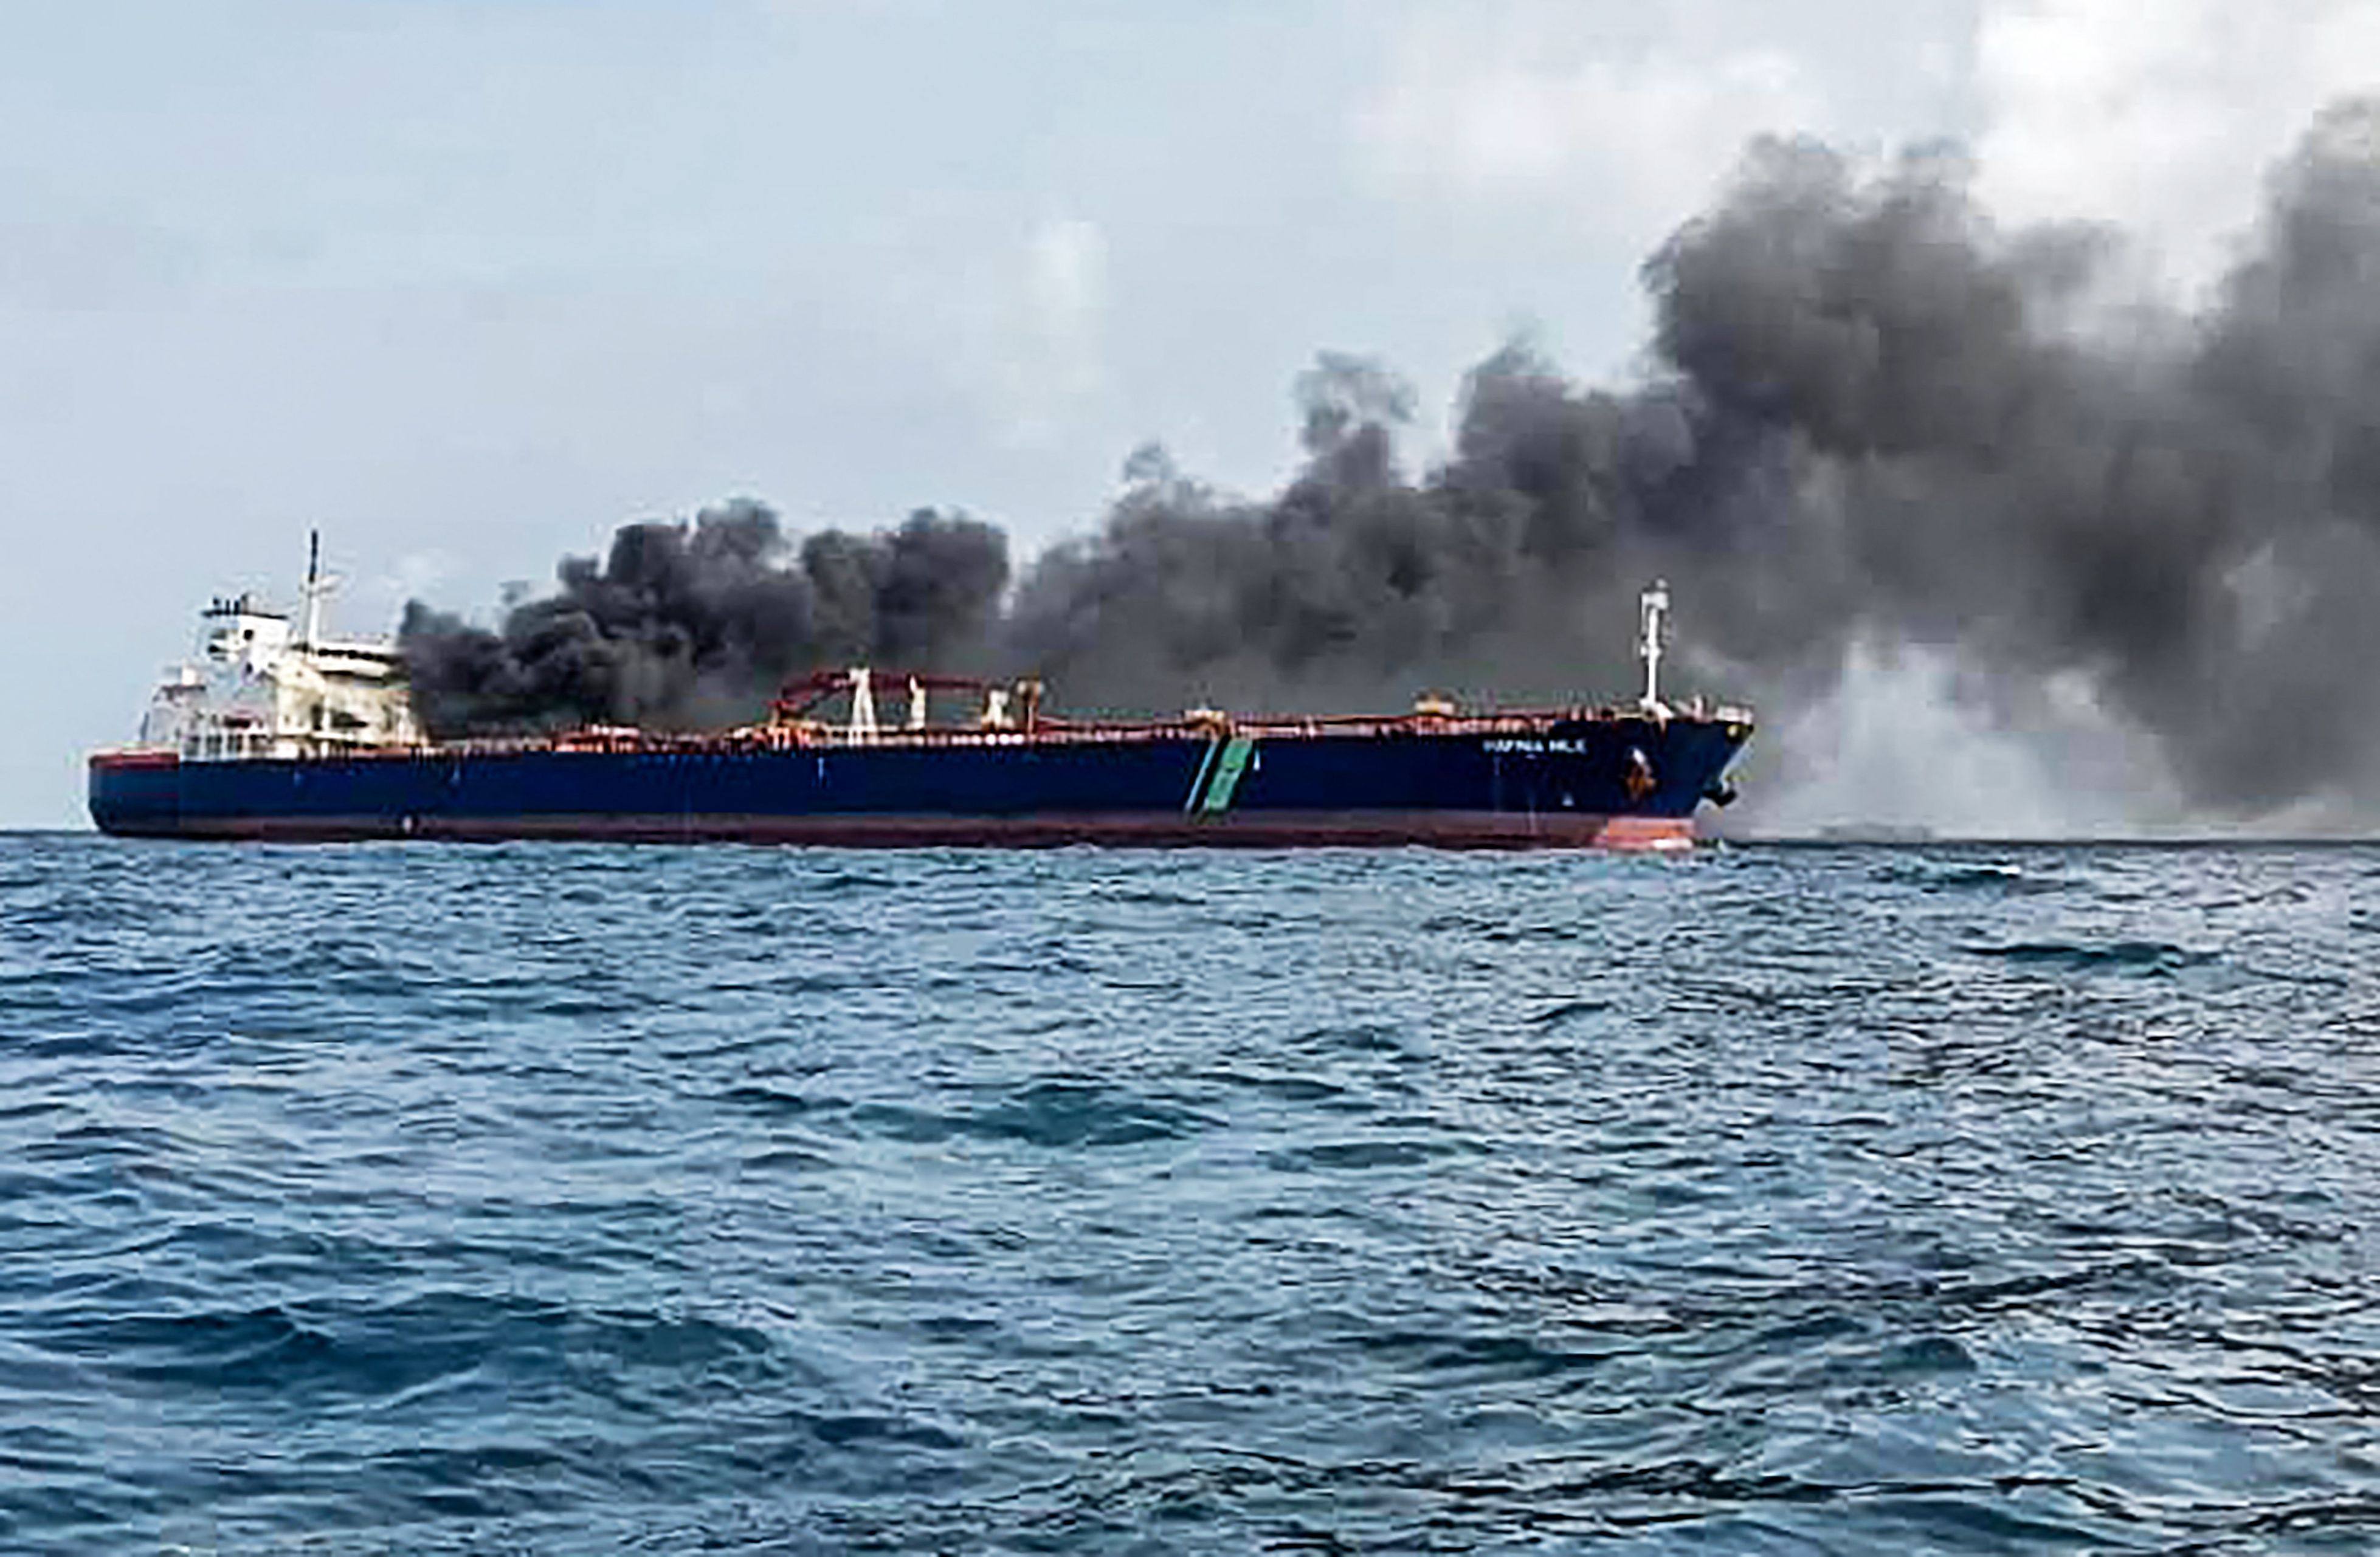 The Singapore-flagged tanker Hafnia Nile on fire. Photo: Handout/Malaysian Maritime Enforcement/AFP